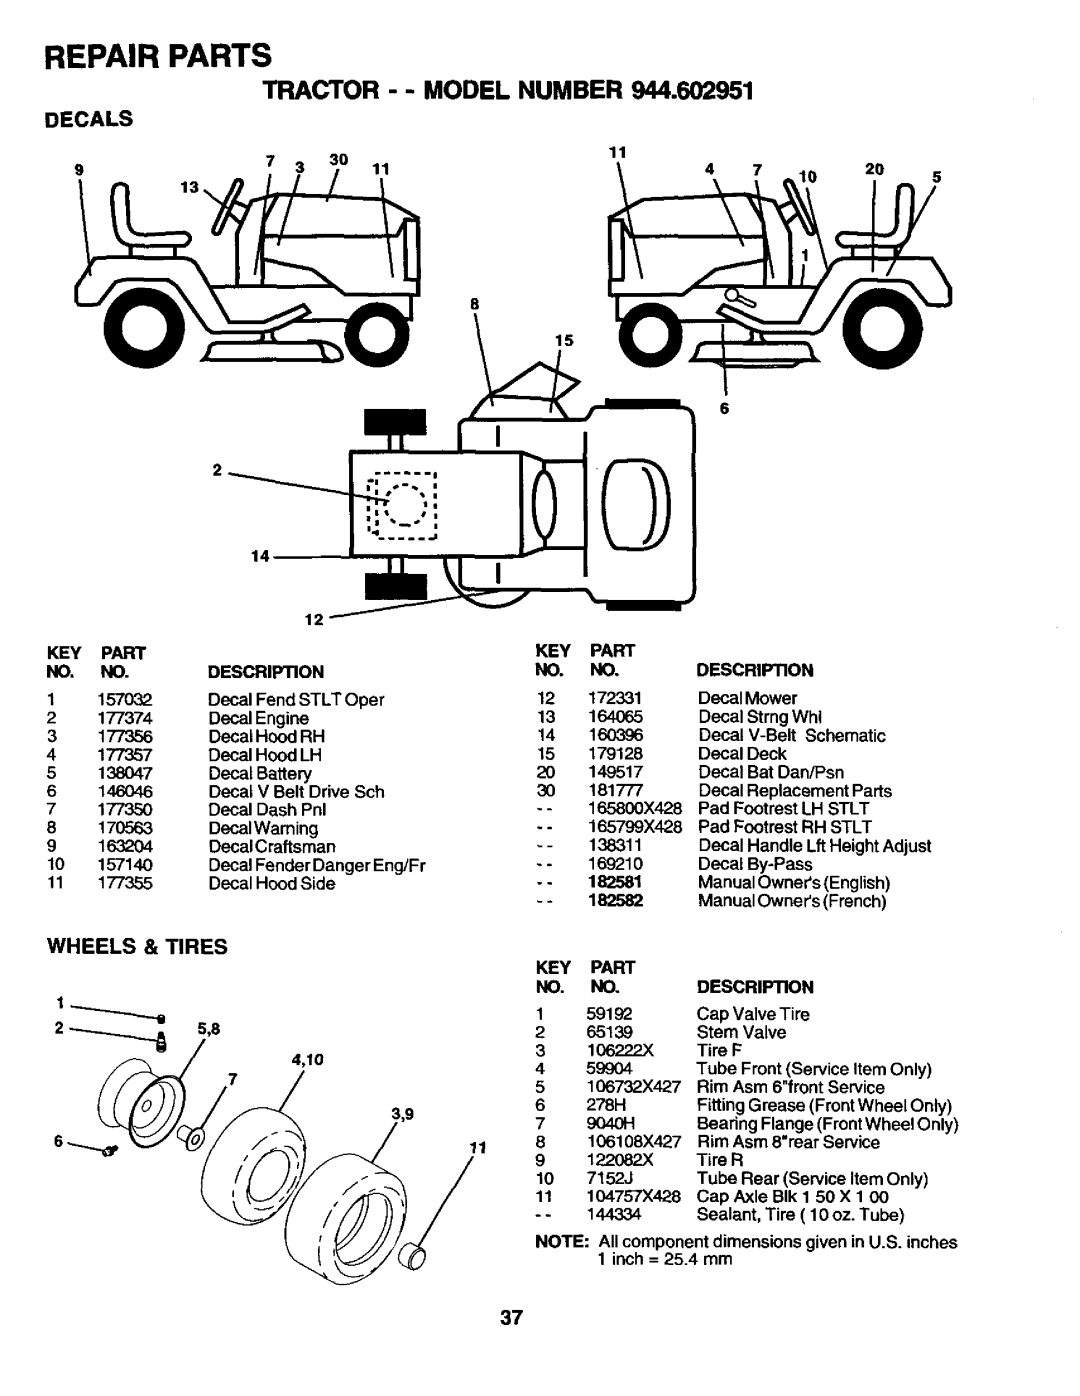 Craftsman 944.602951 owner manual Repair Parts, Tractor - - Model Number, Decals, Wheels & Tires, DecalReplacementParts 